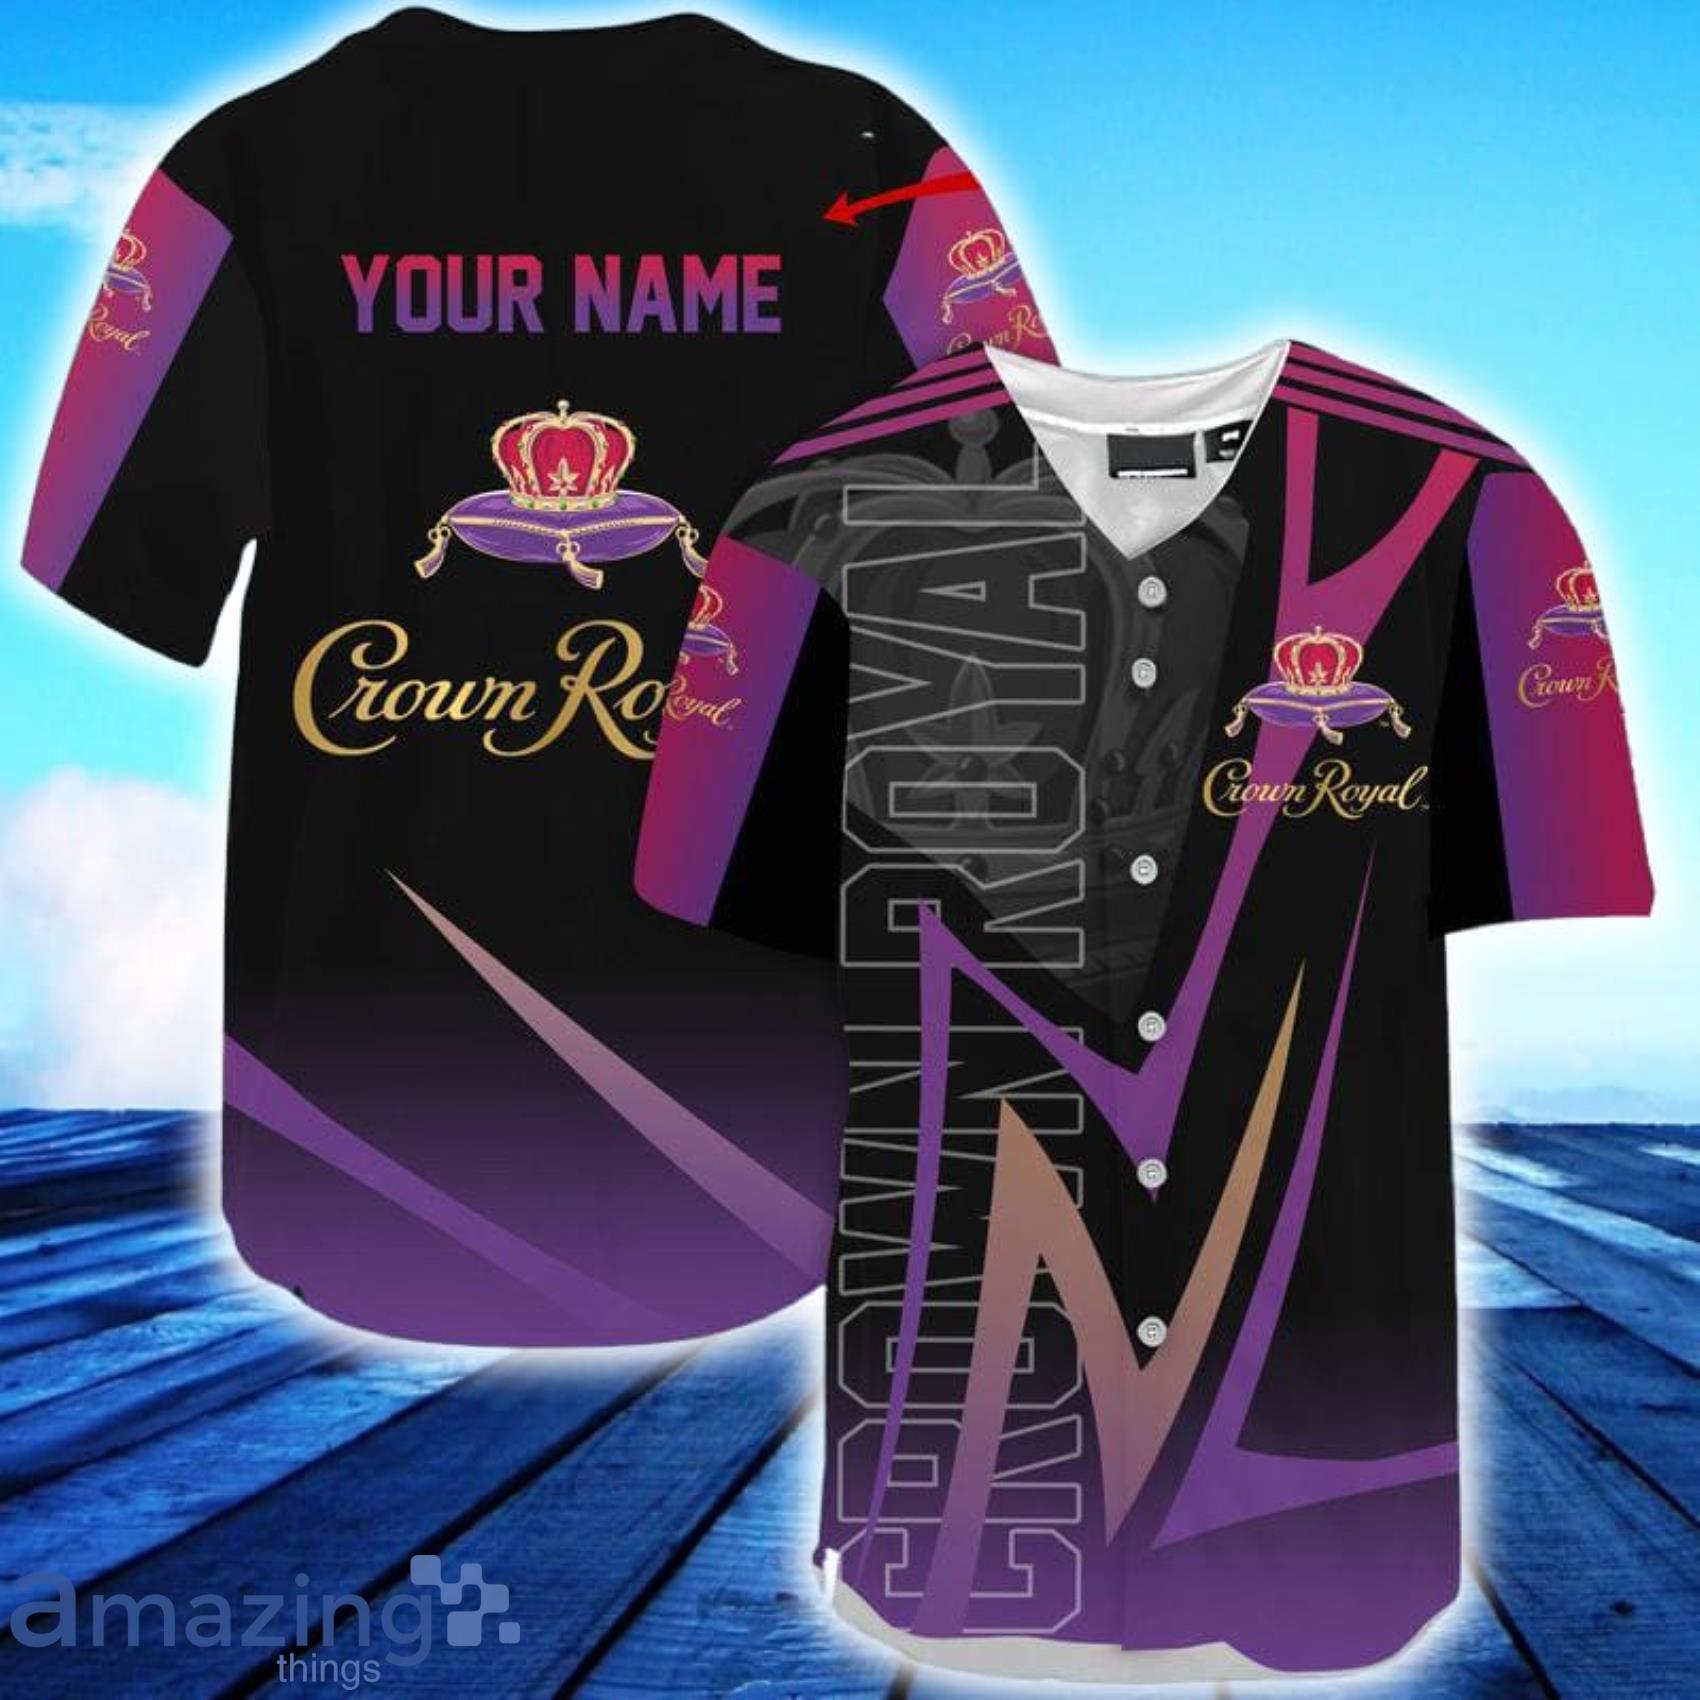 Personalized Black Crown Royal Baseball Jersey